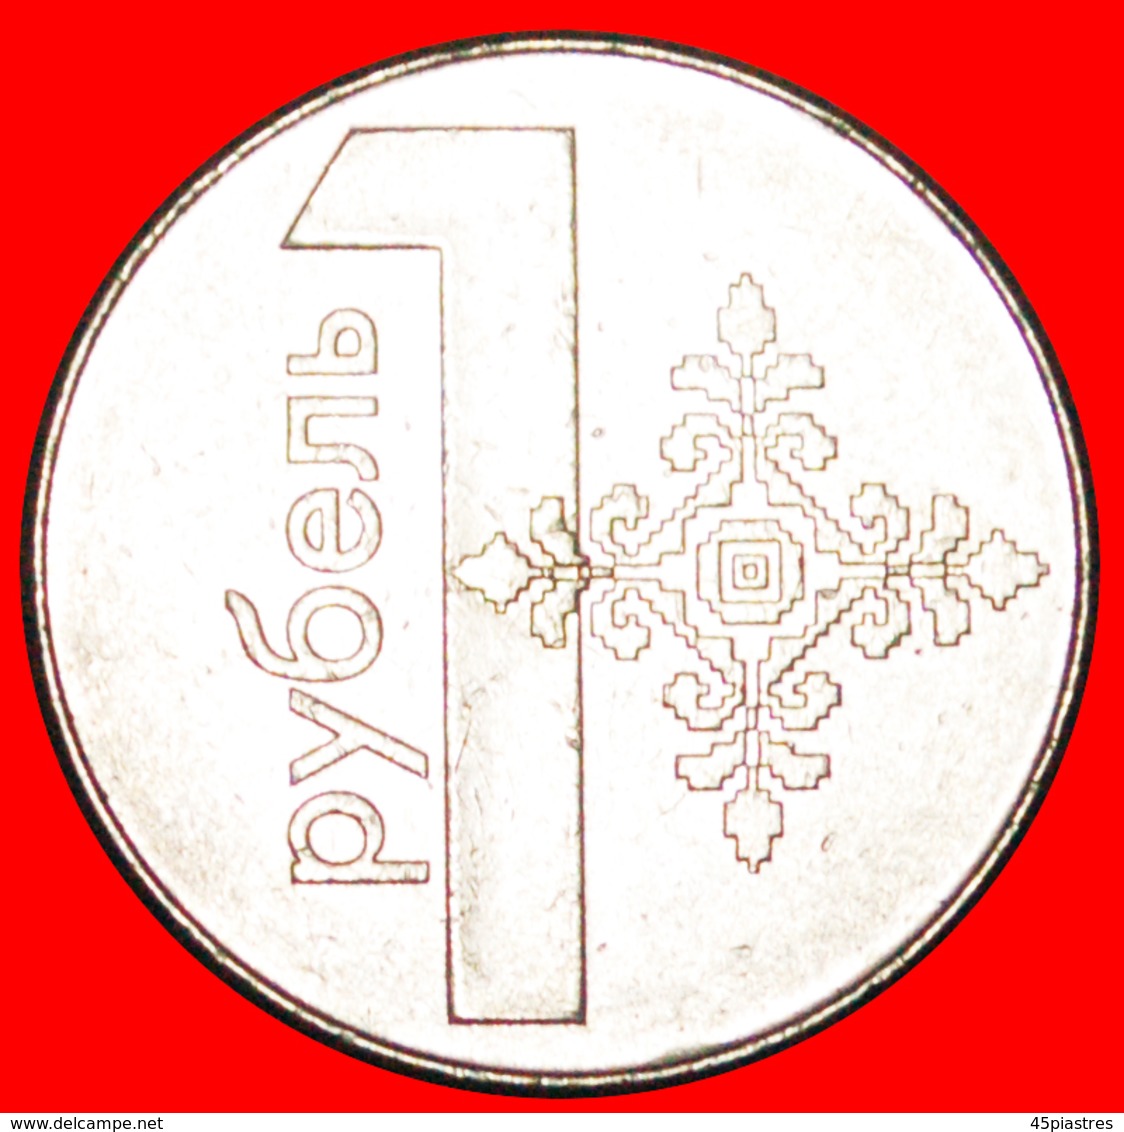 · SLOVAKIA: Belorussia (ex. The USSR, Russia) ★ 1 ROUBLE 2009 MINT LUSTER! LOW START ★ NO RESERVE! - Belarús